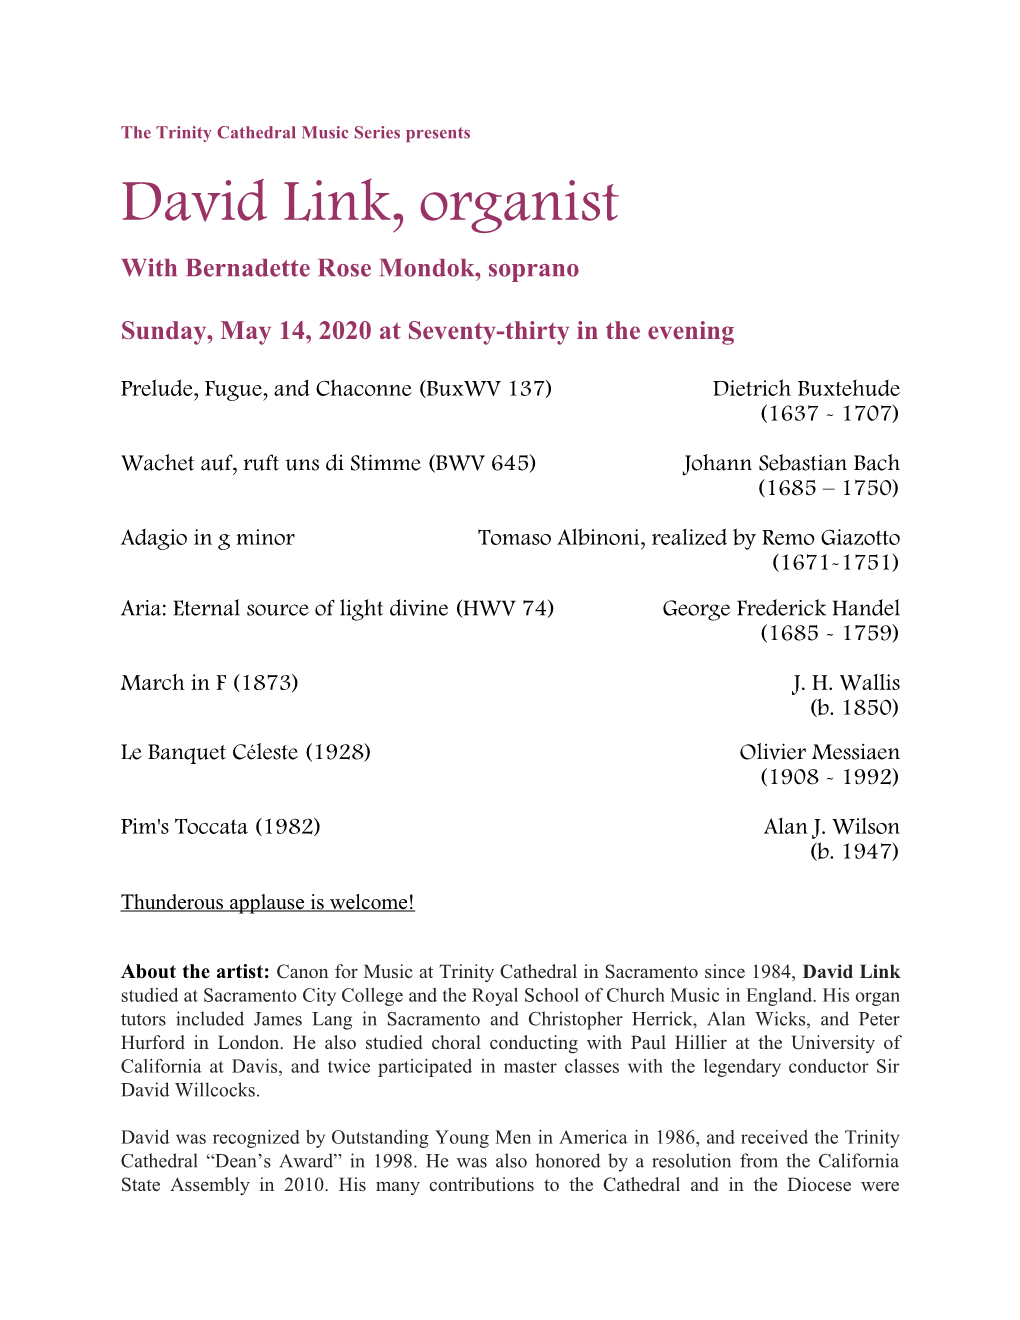 Link Organ Concert Program